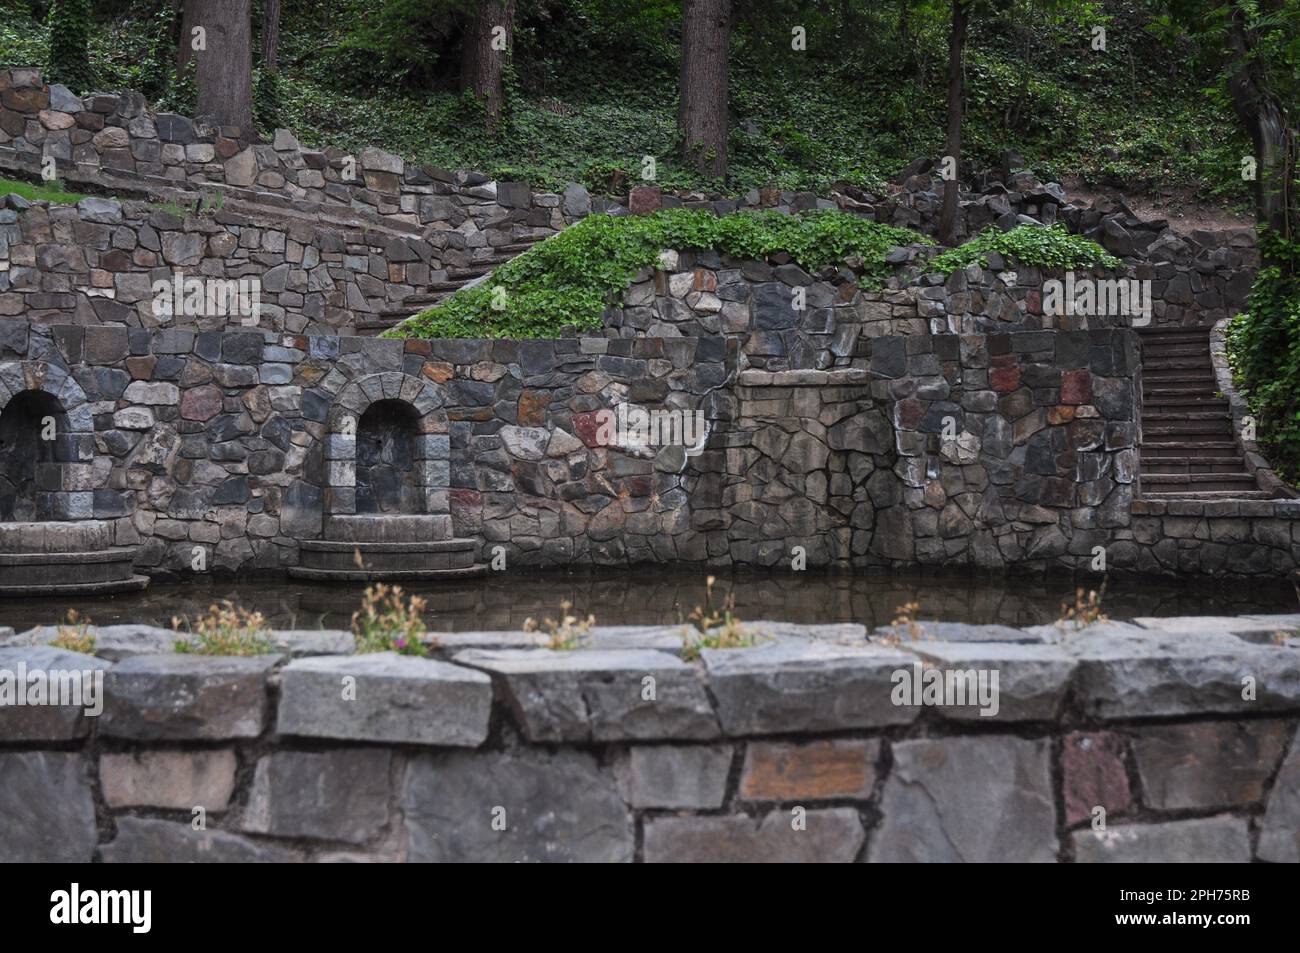 Fountain and stone wall / Fuente y pared de piedra Stock Photo